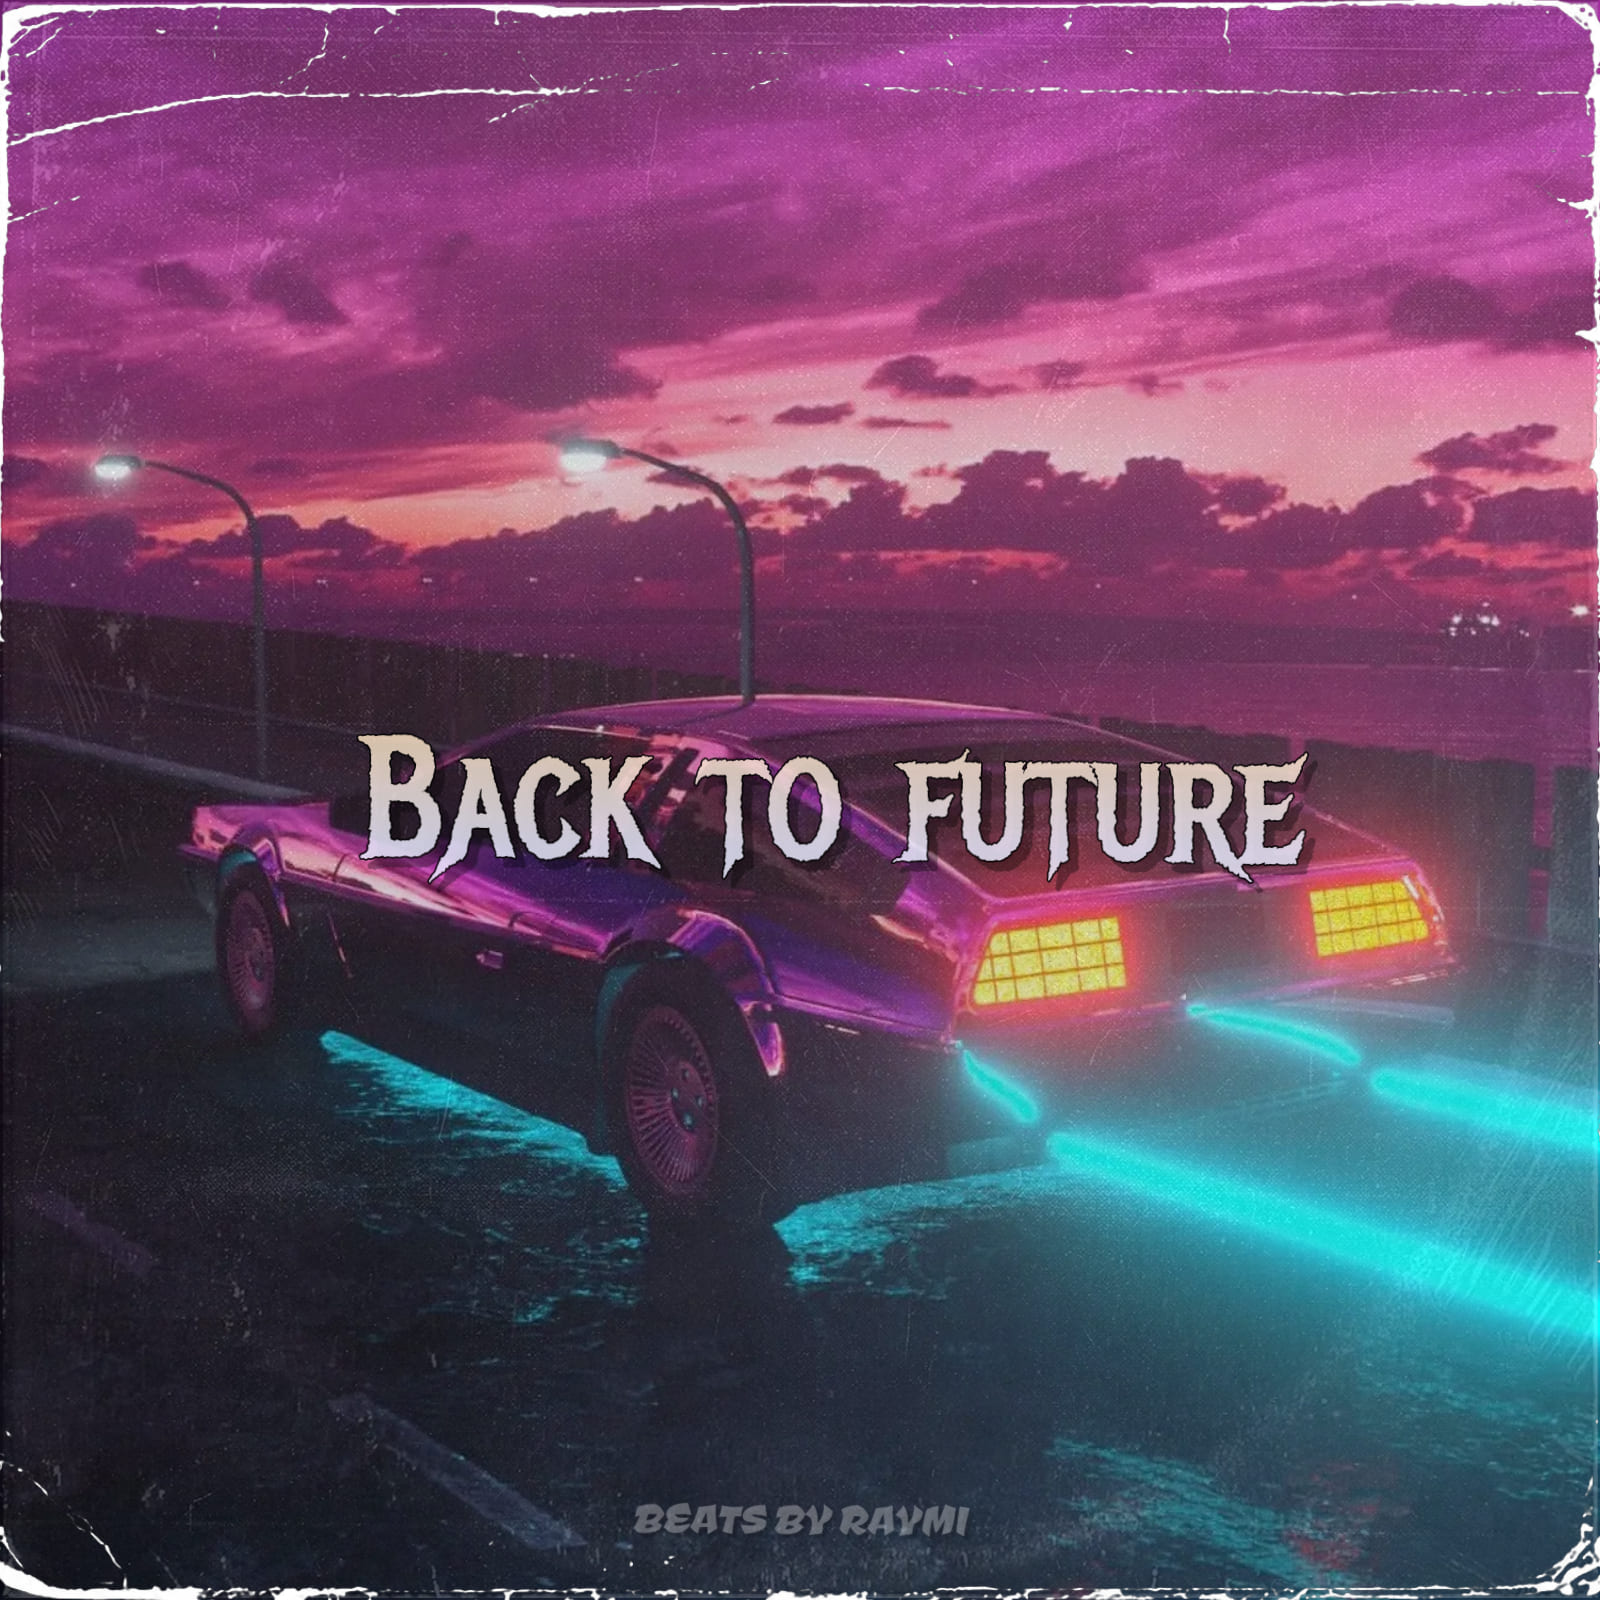 обложка бита, Raymi, музыка, cover, Back to future (энергичный бит в стиле 90-х)